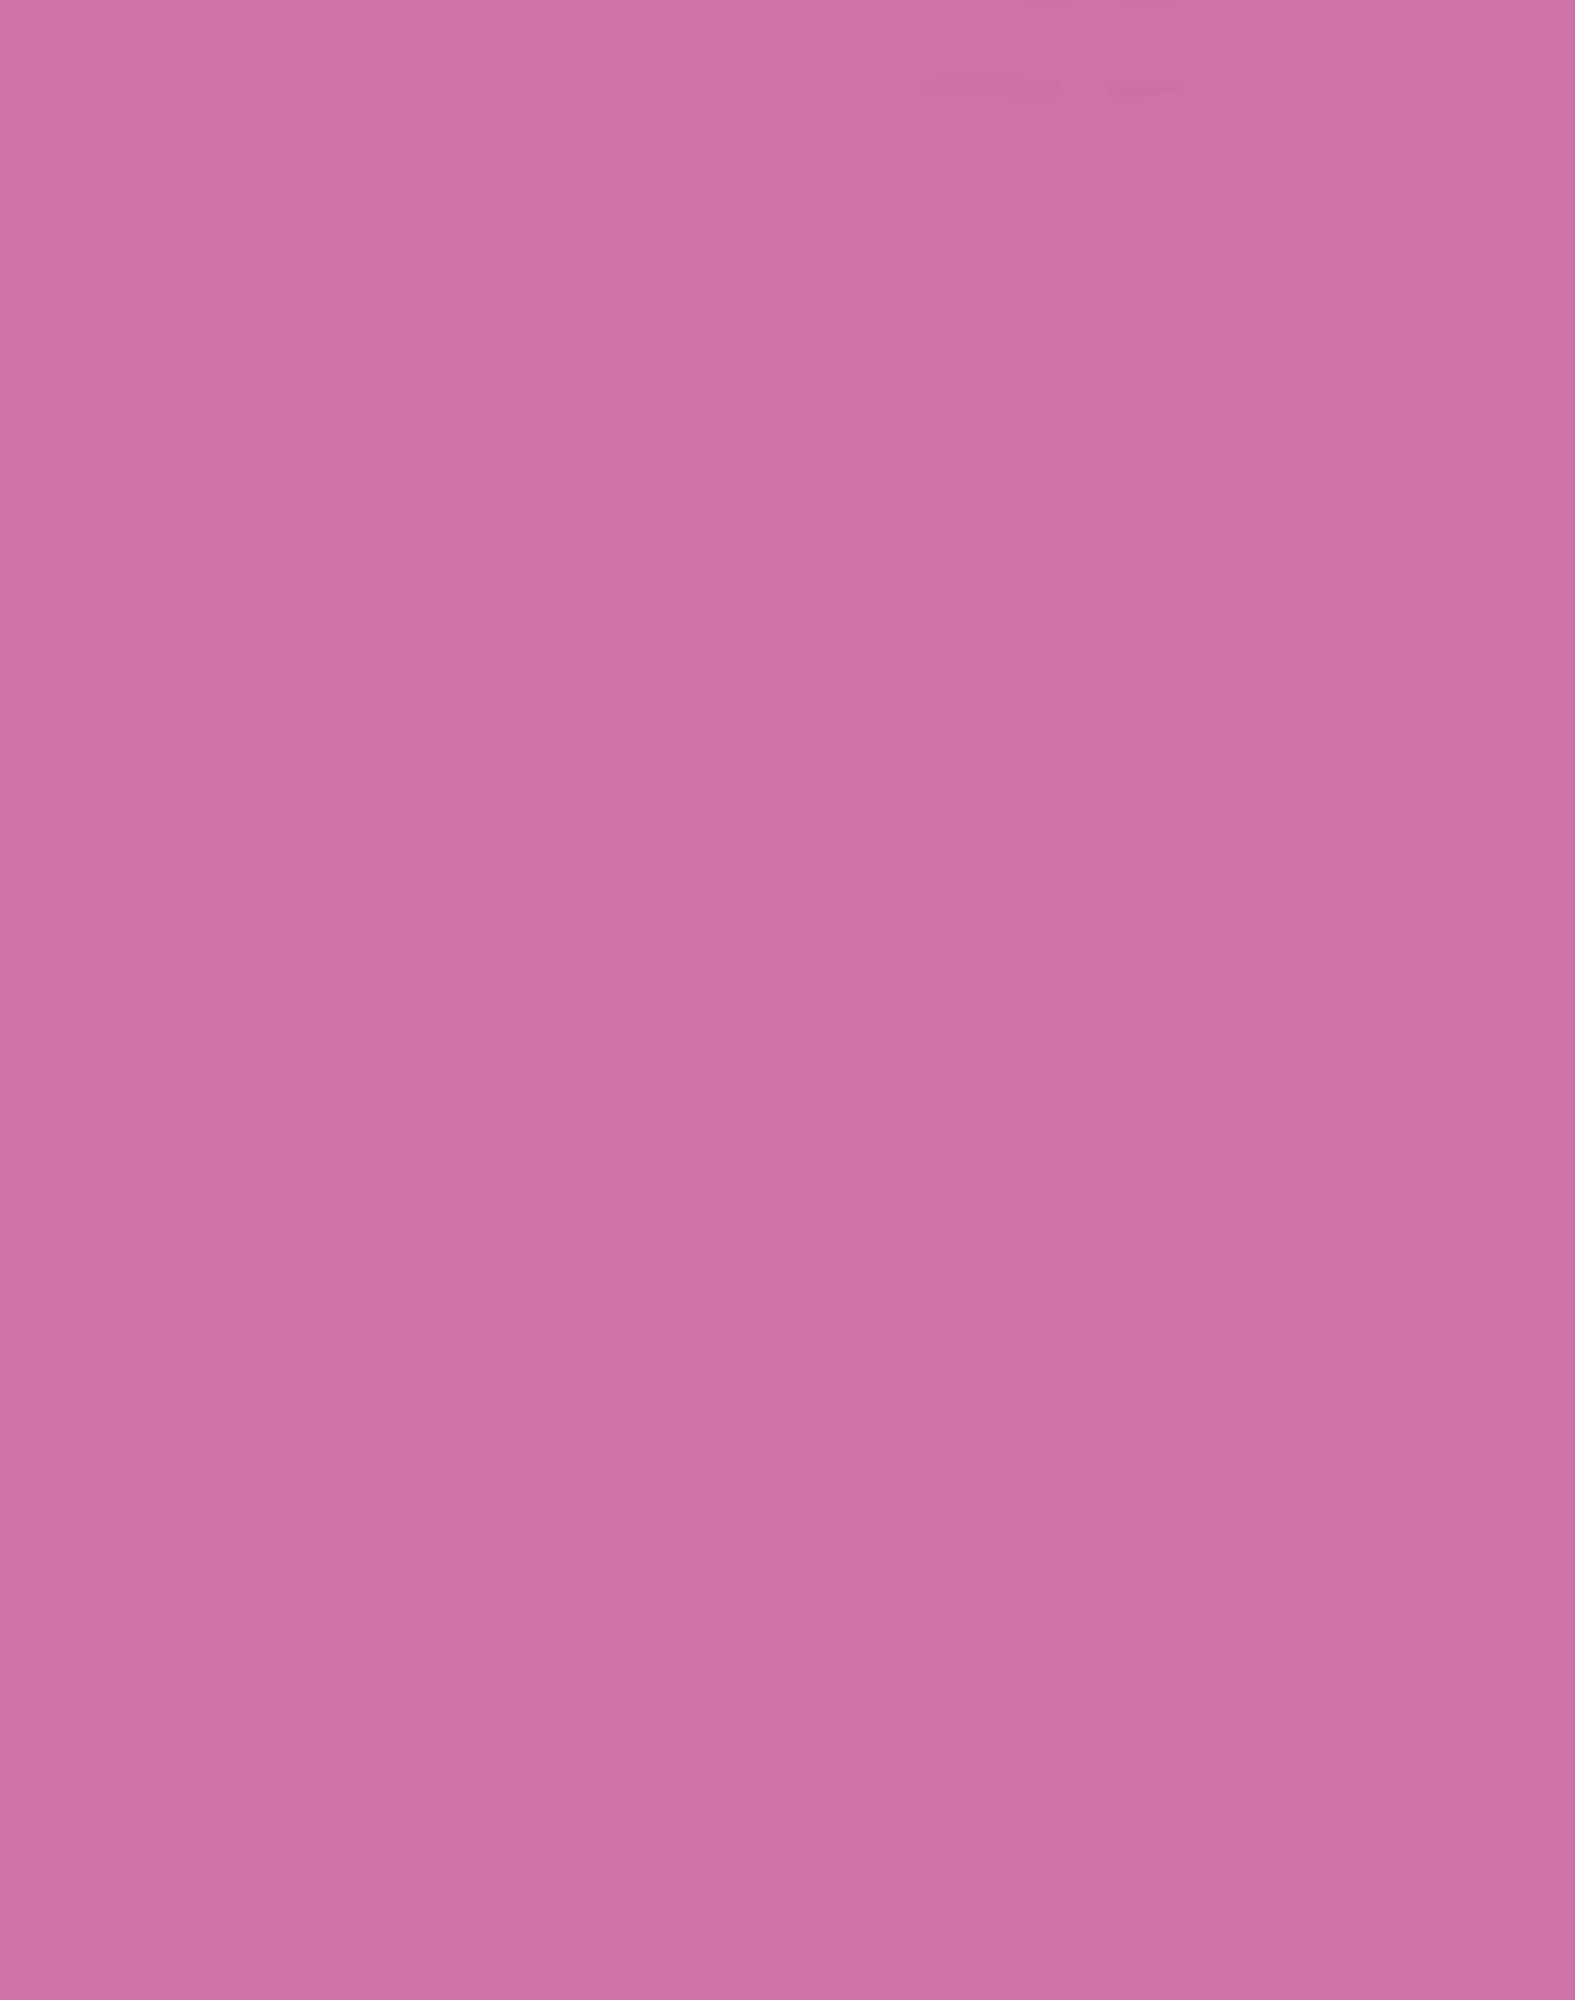 Passion Pink 206,116,167